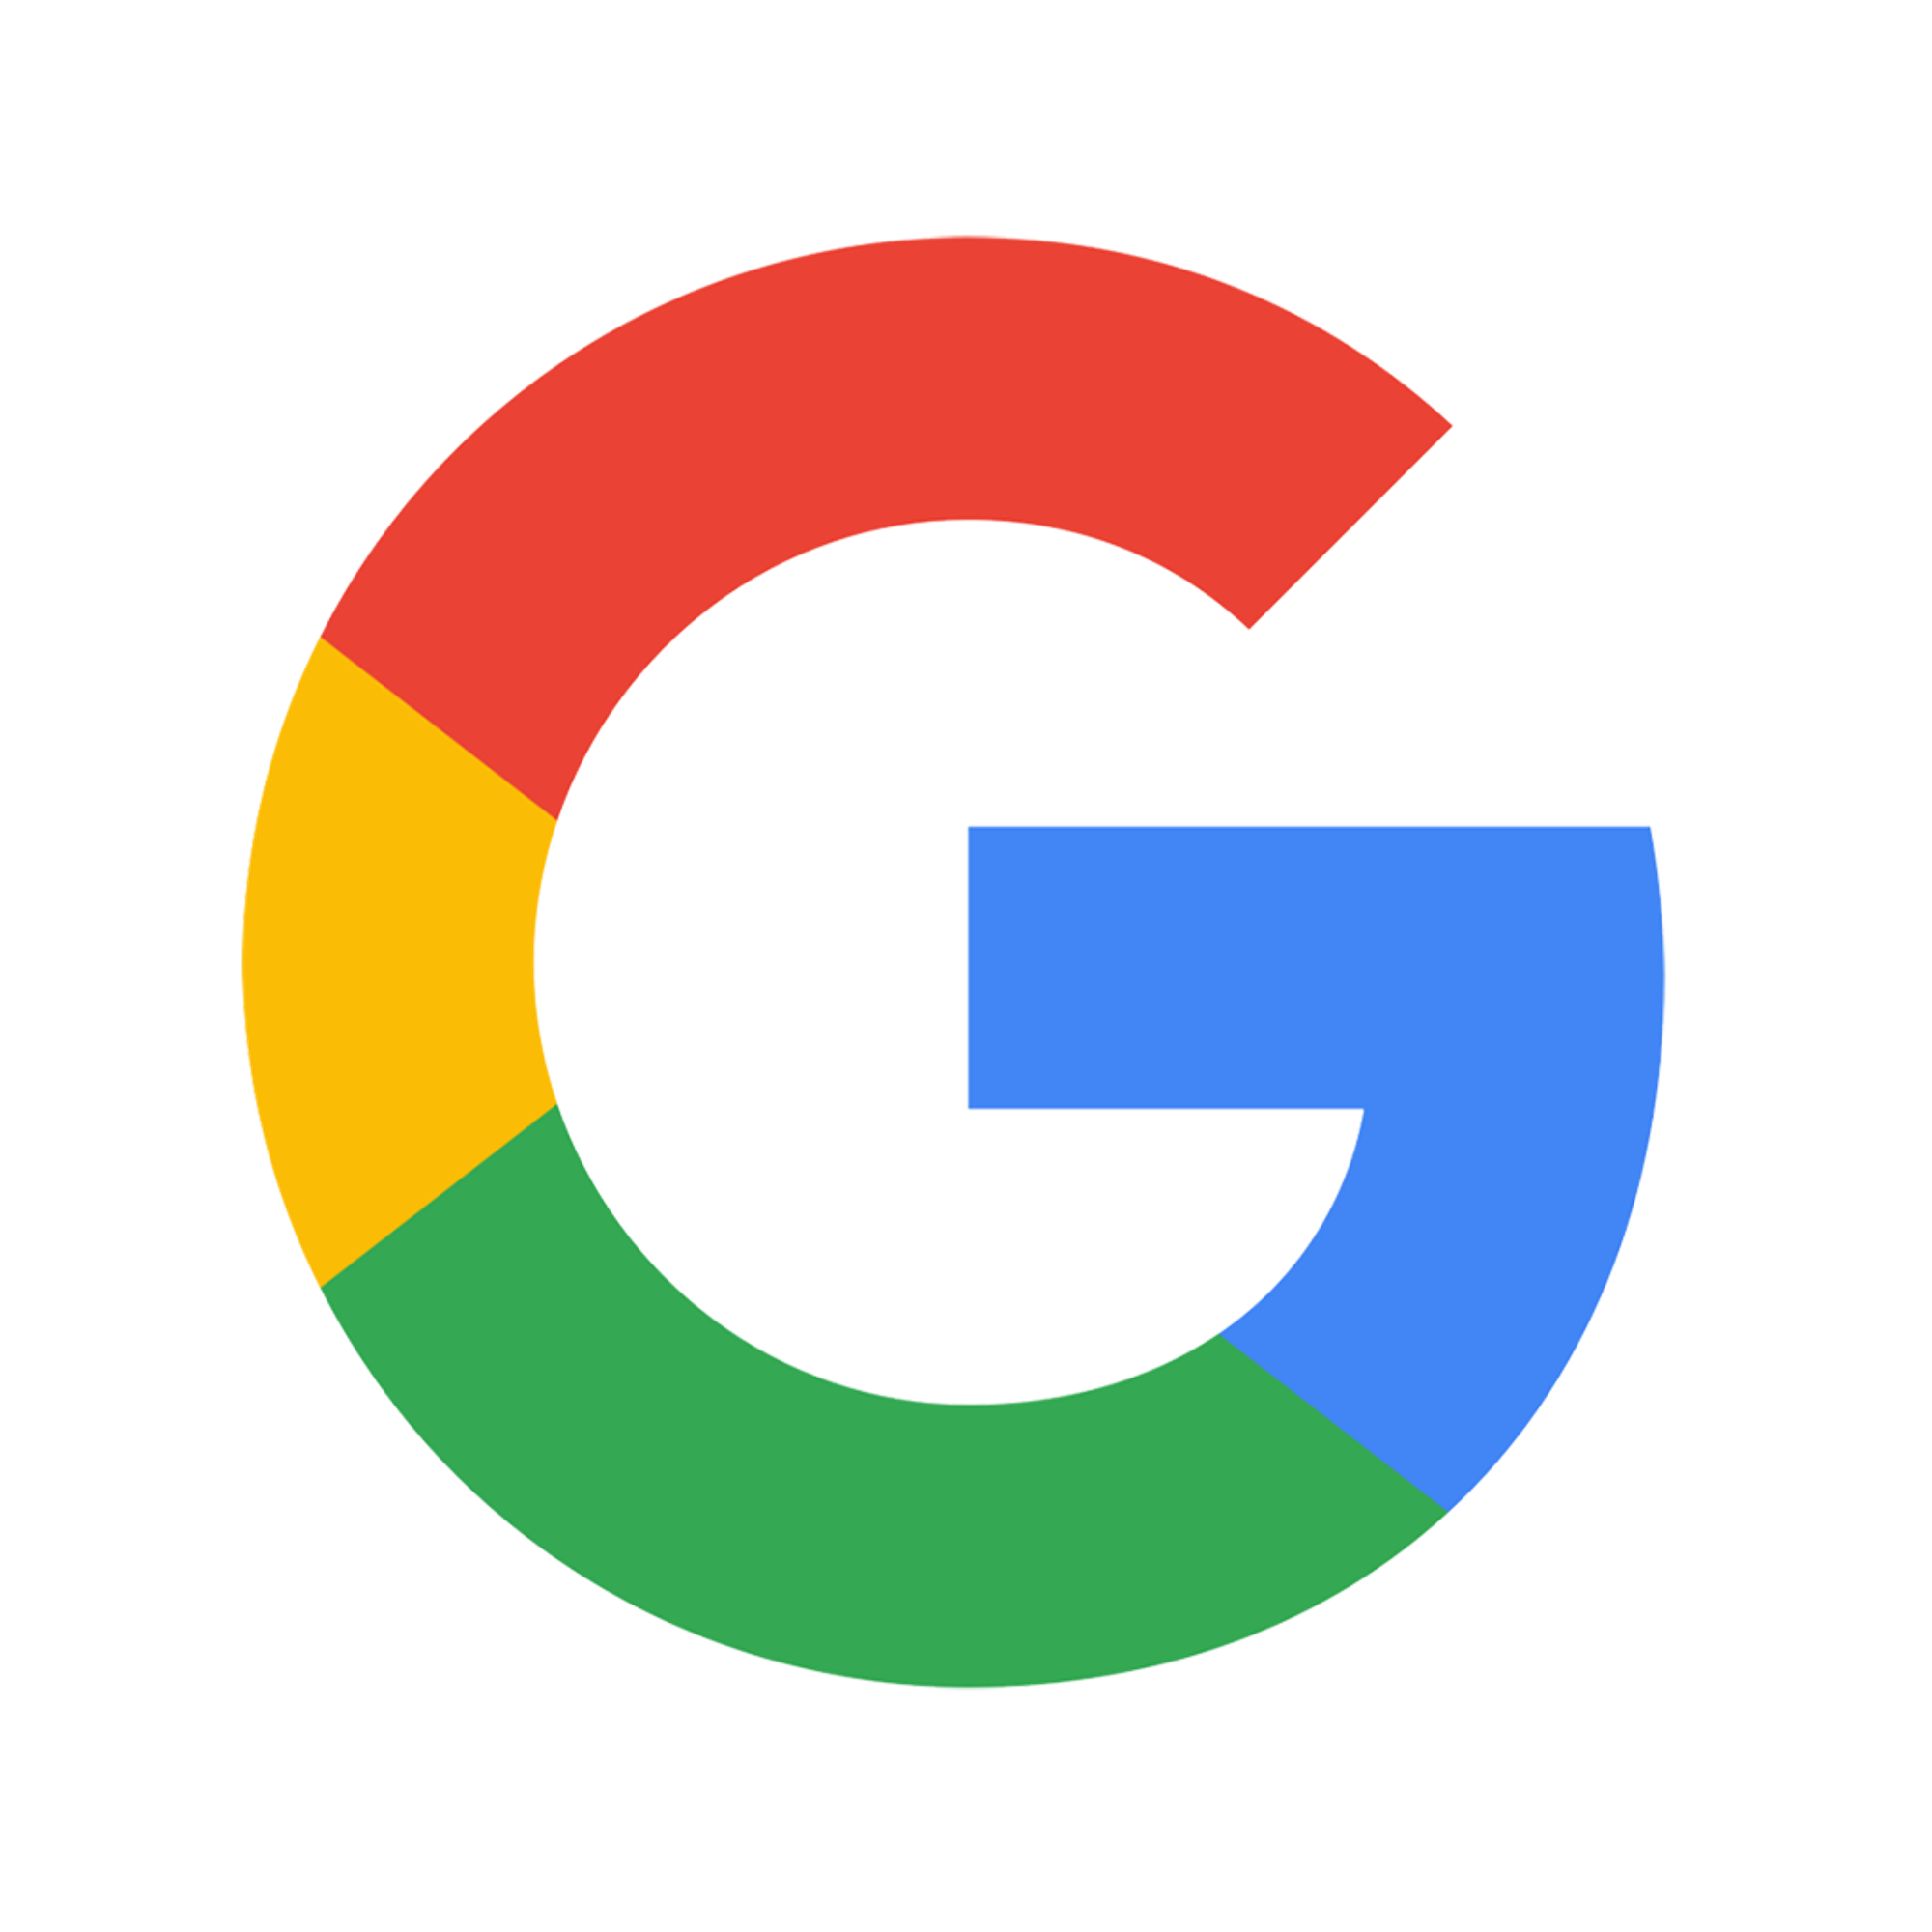 Google Groups